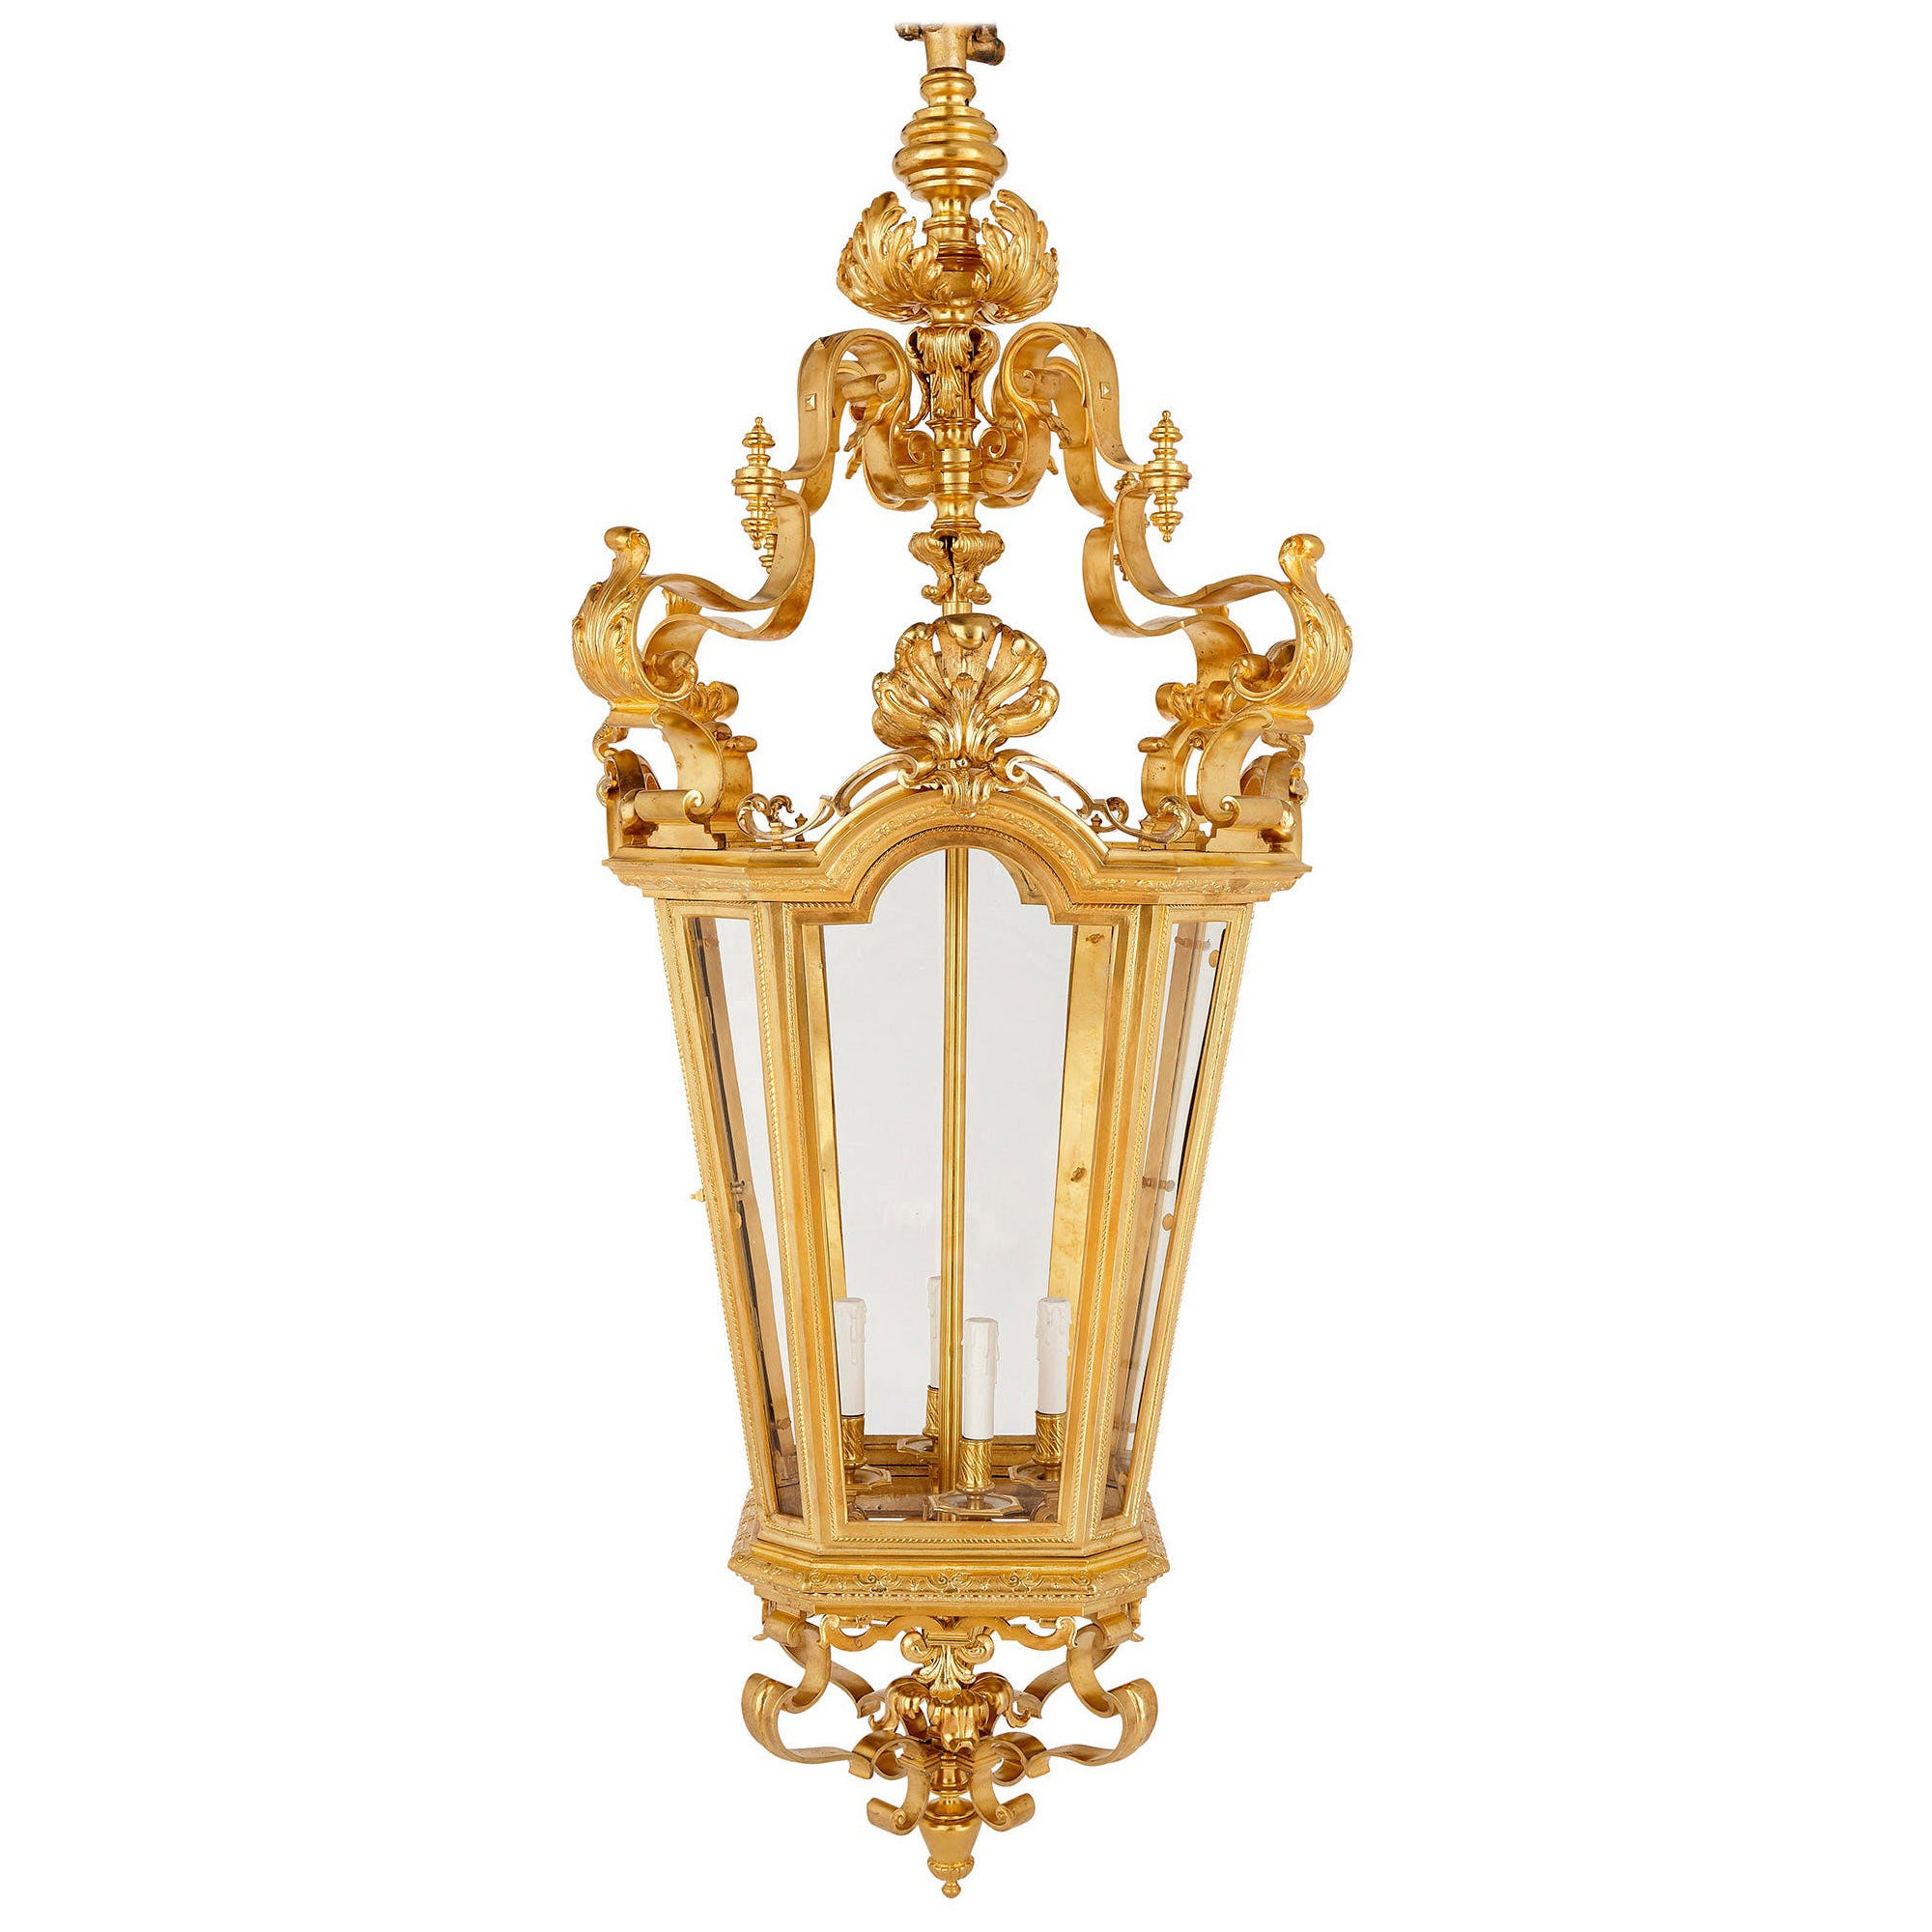 Très grande lanterne en bronze doré de style rococo d'époque Napoléon III